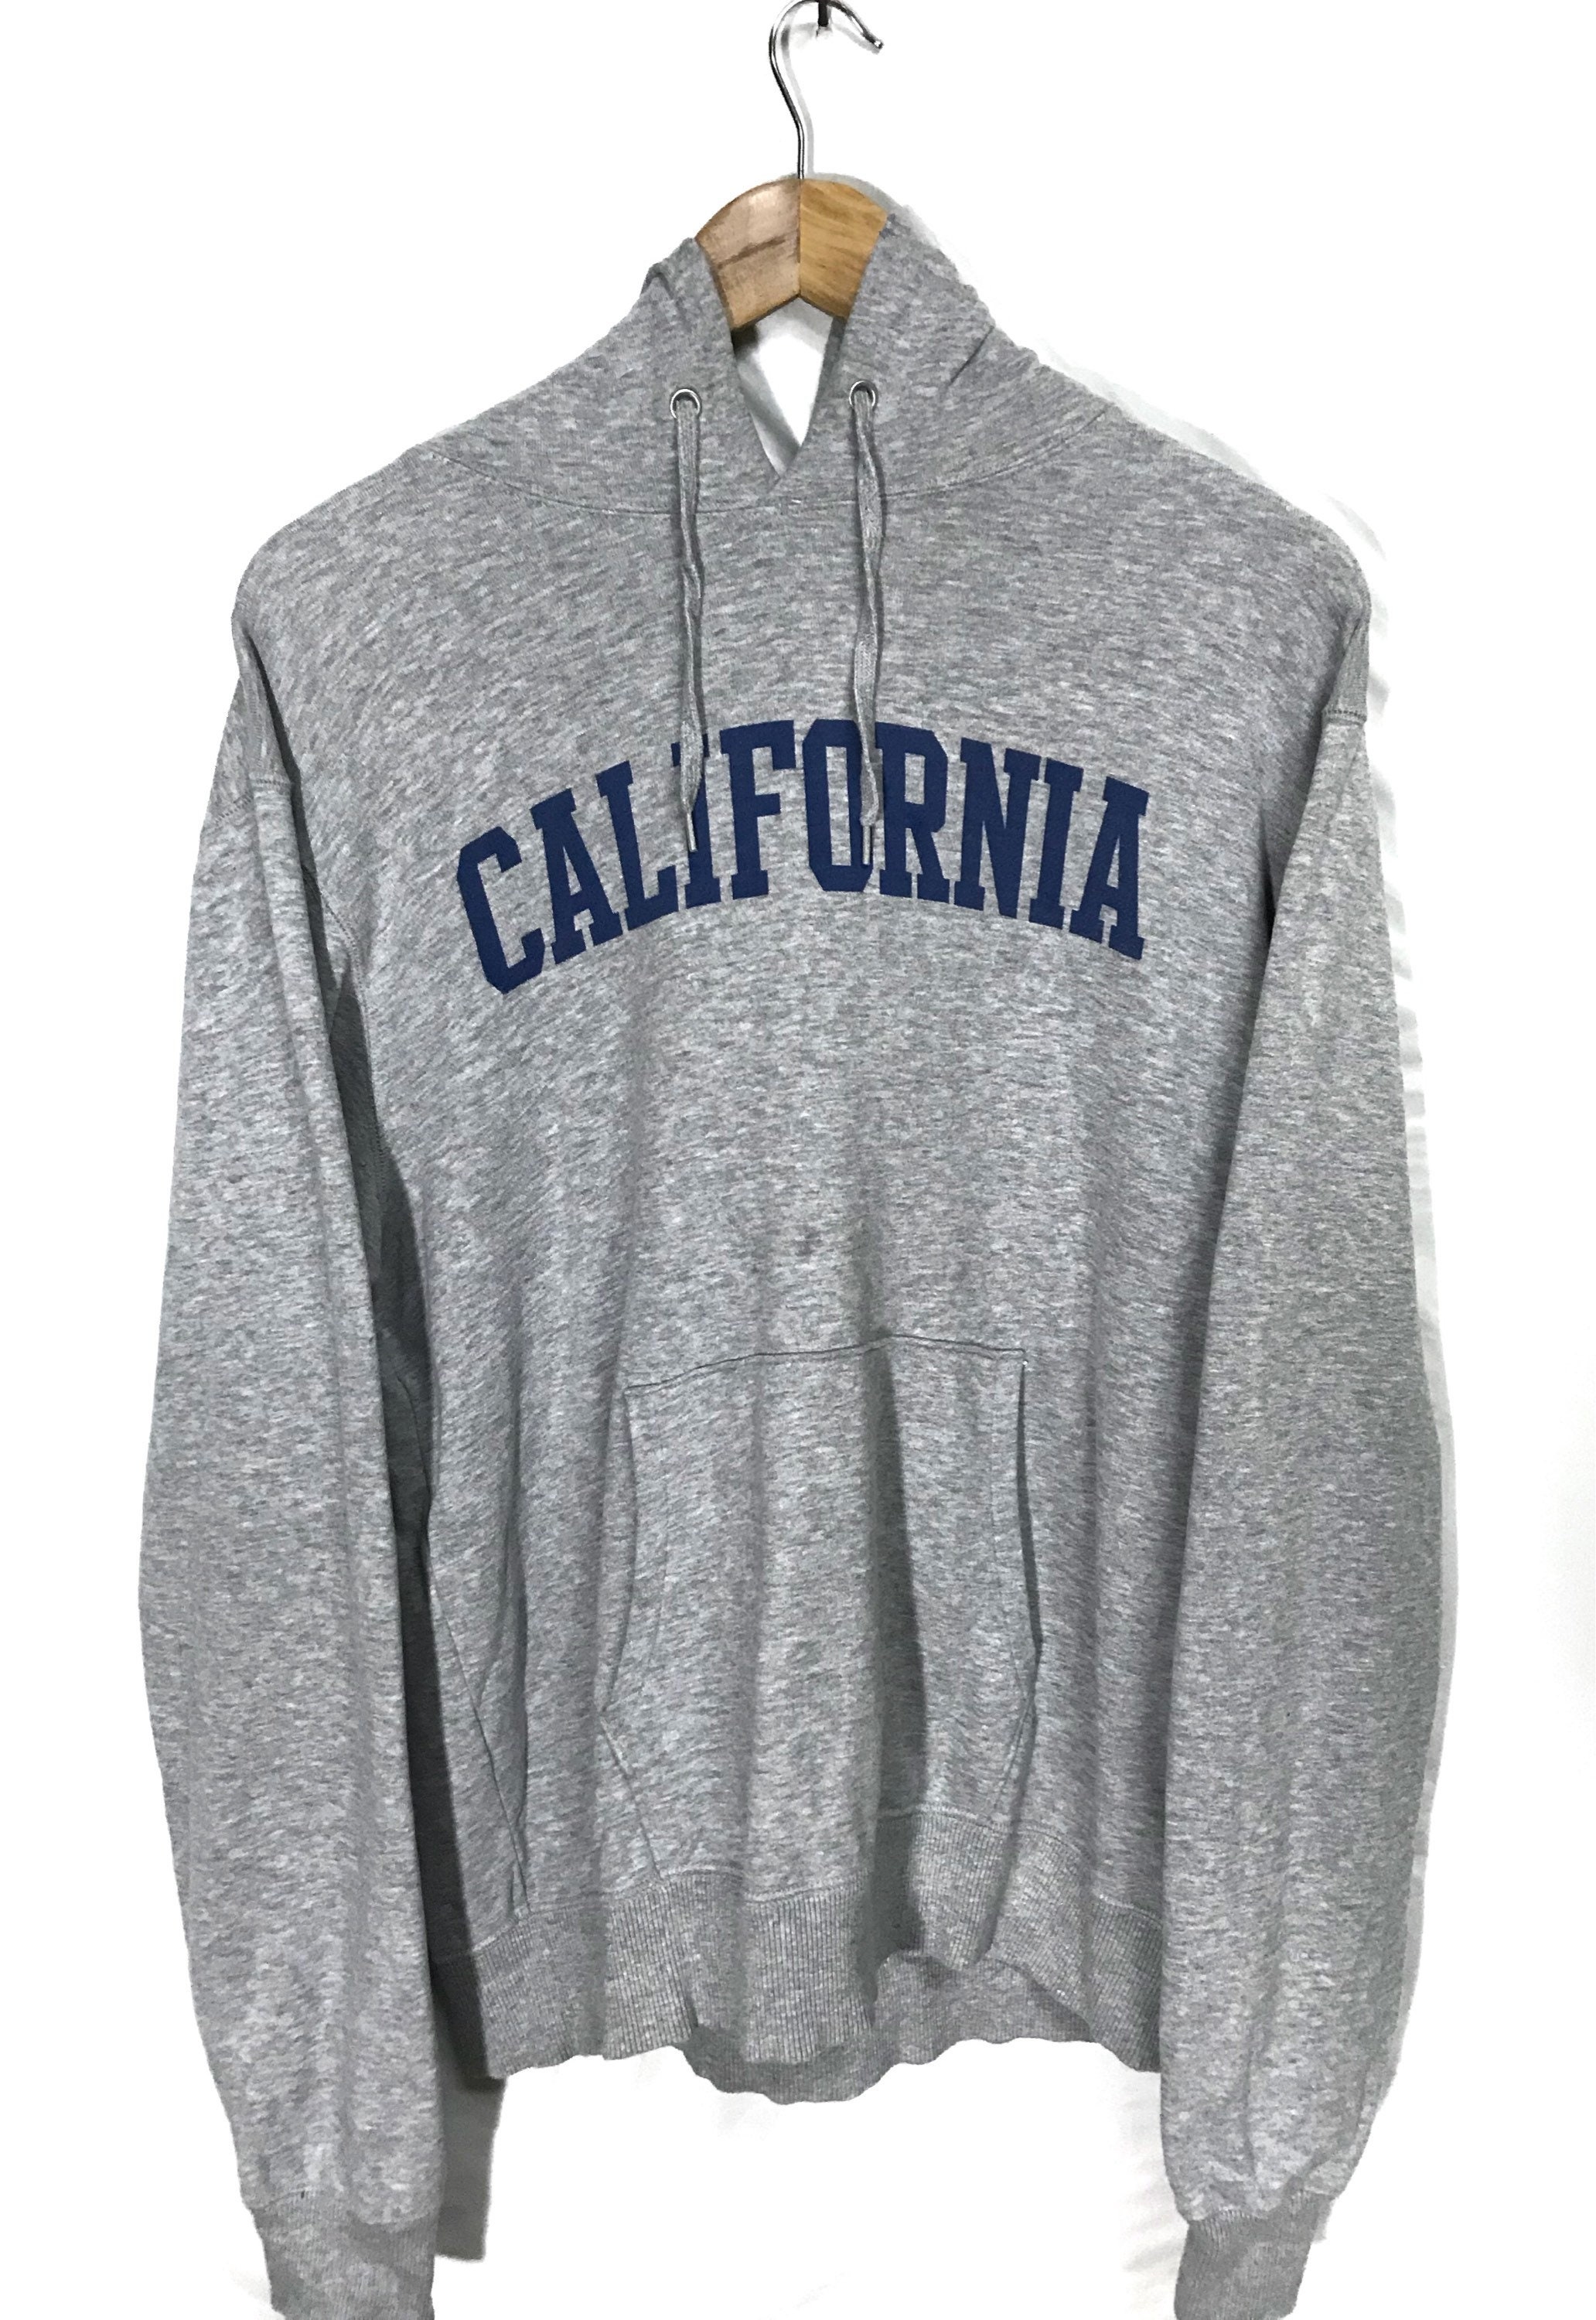 Big Logo California - Champion Vintage Etsy Large Hoodies Spellout Size Sweatshirt by